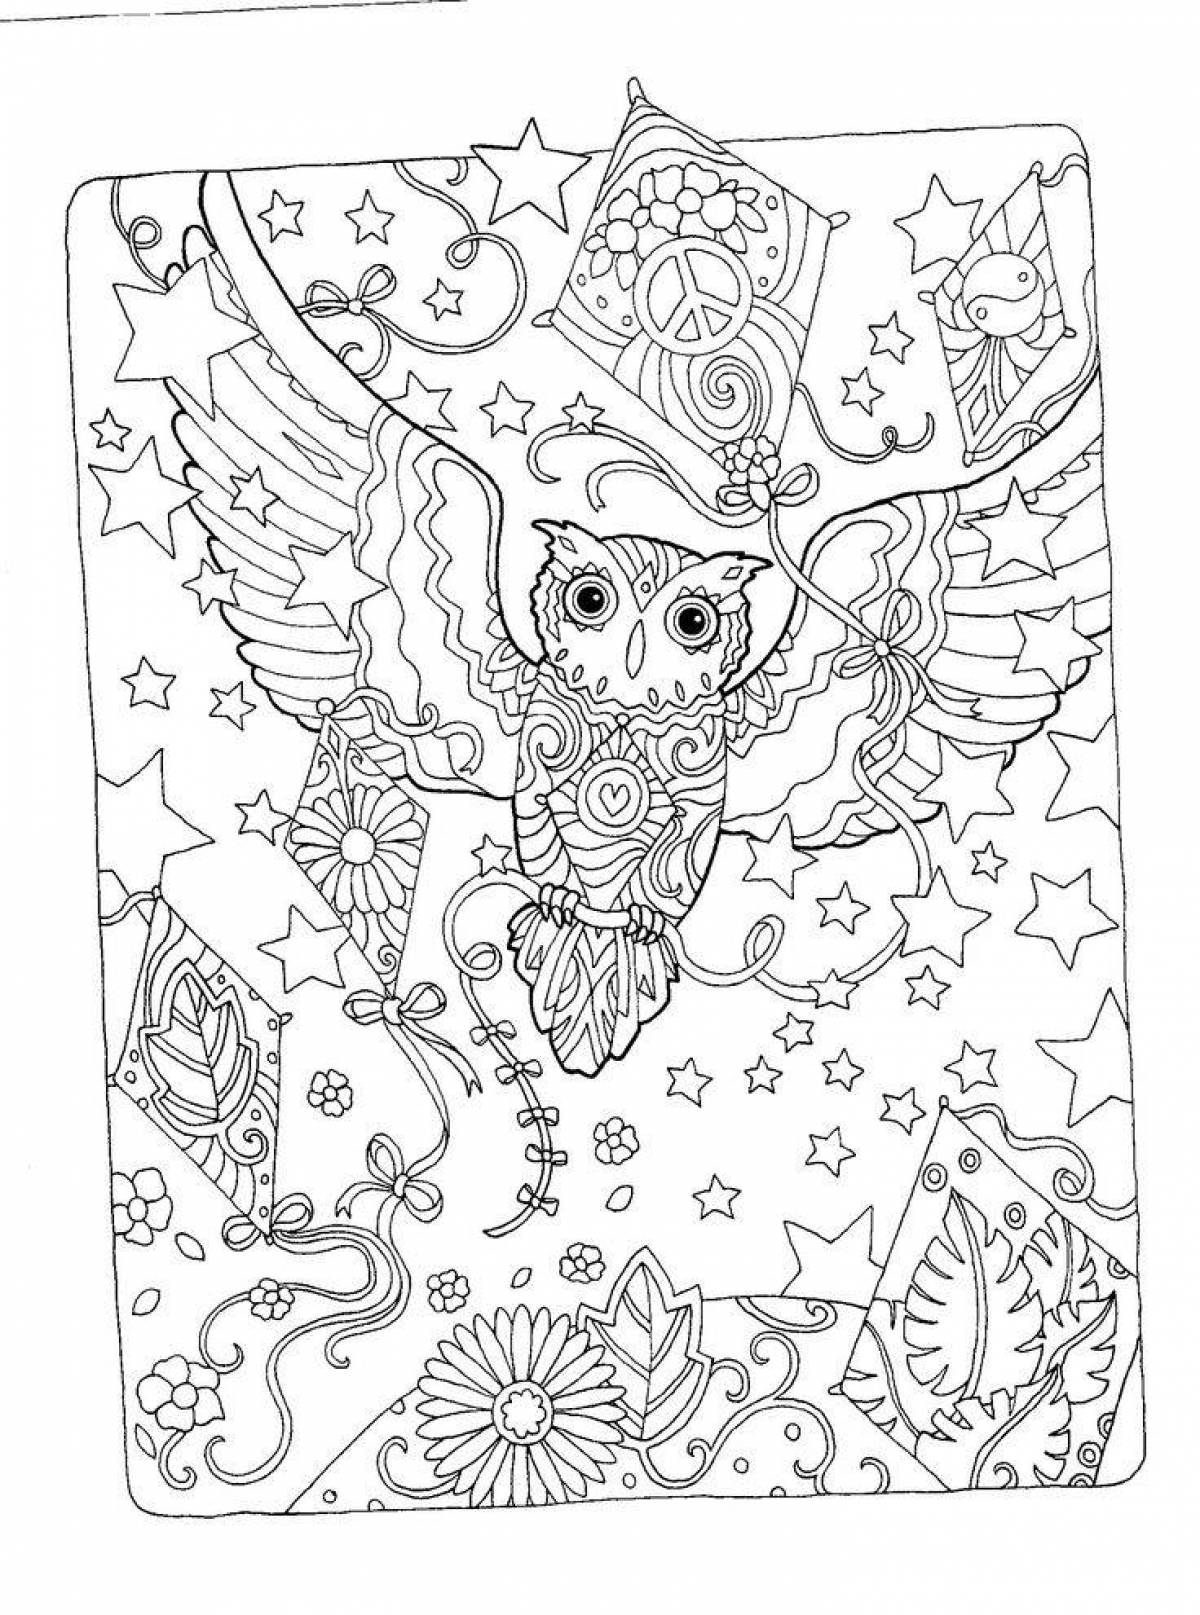 Owl antistress #2